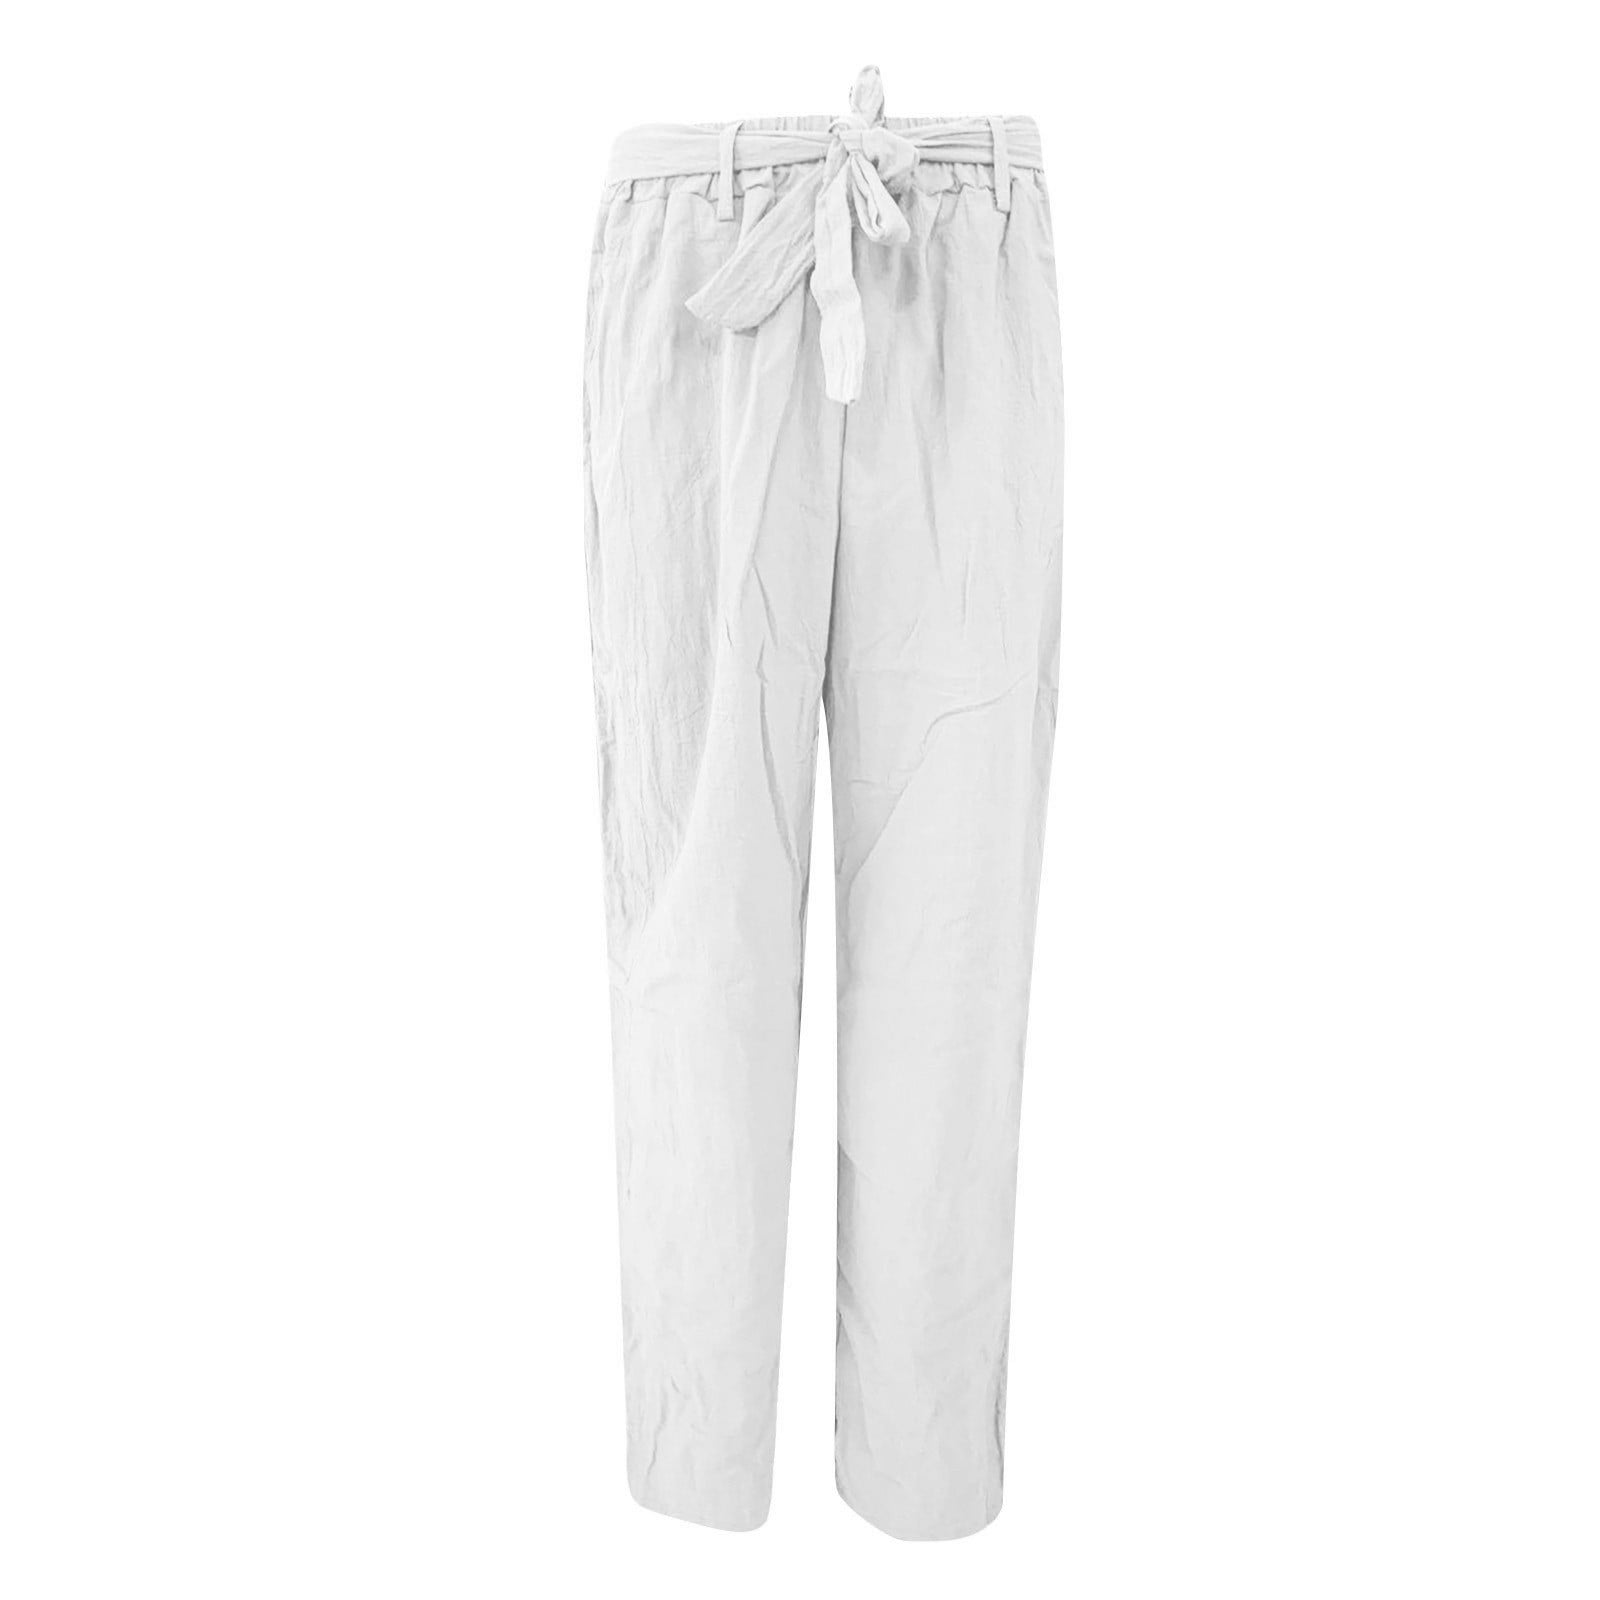 HTNBO Womens Wide Leg Casual Pants Cotton Loose Trouser Palazzo Pants 